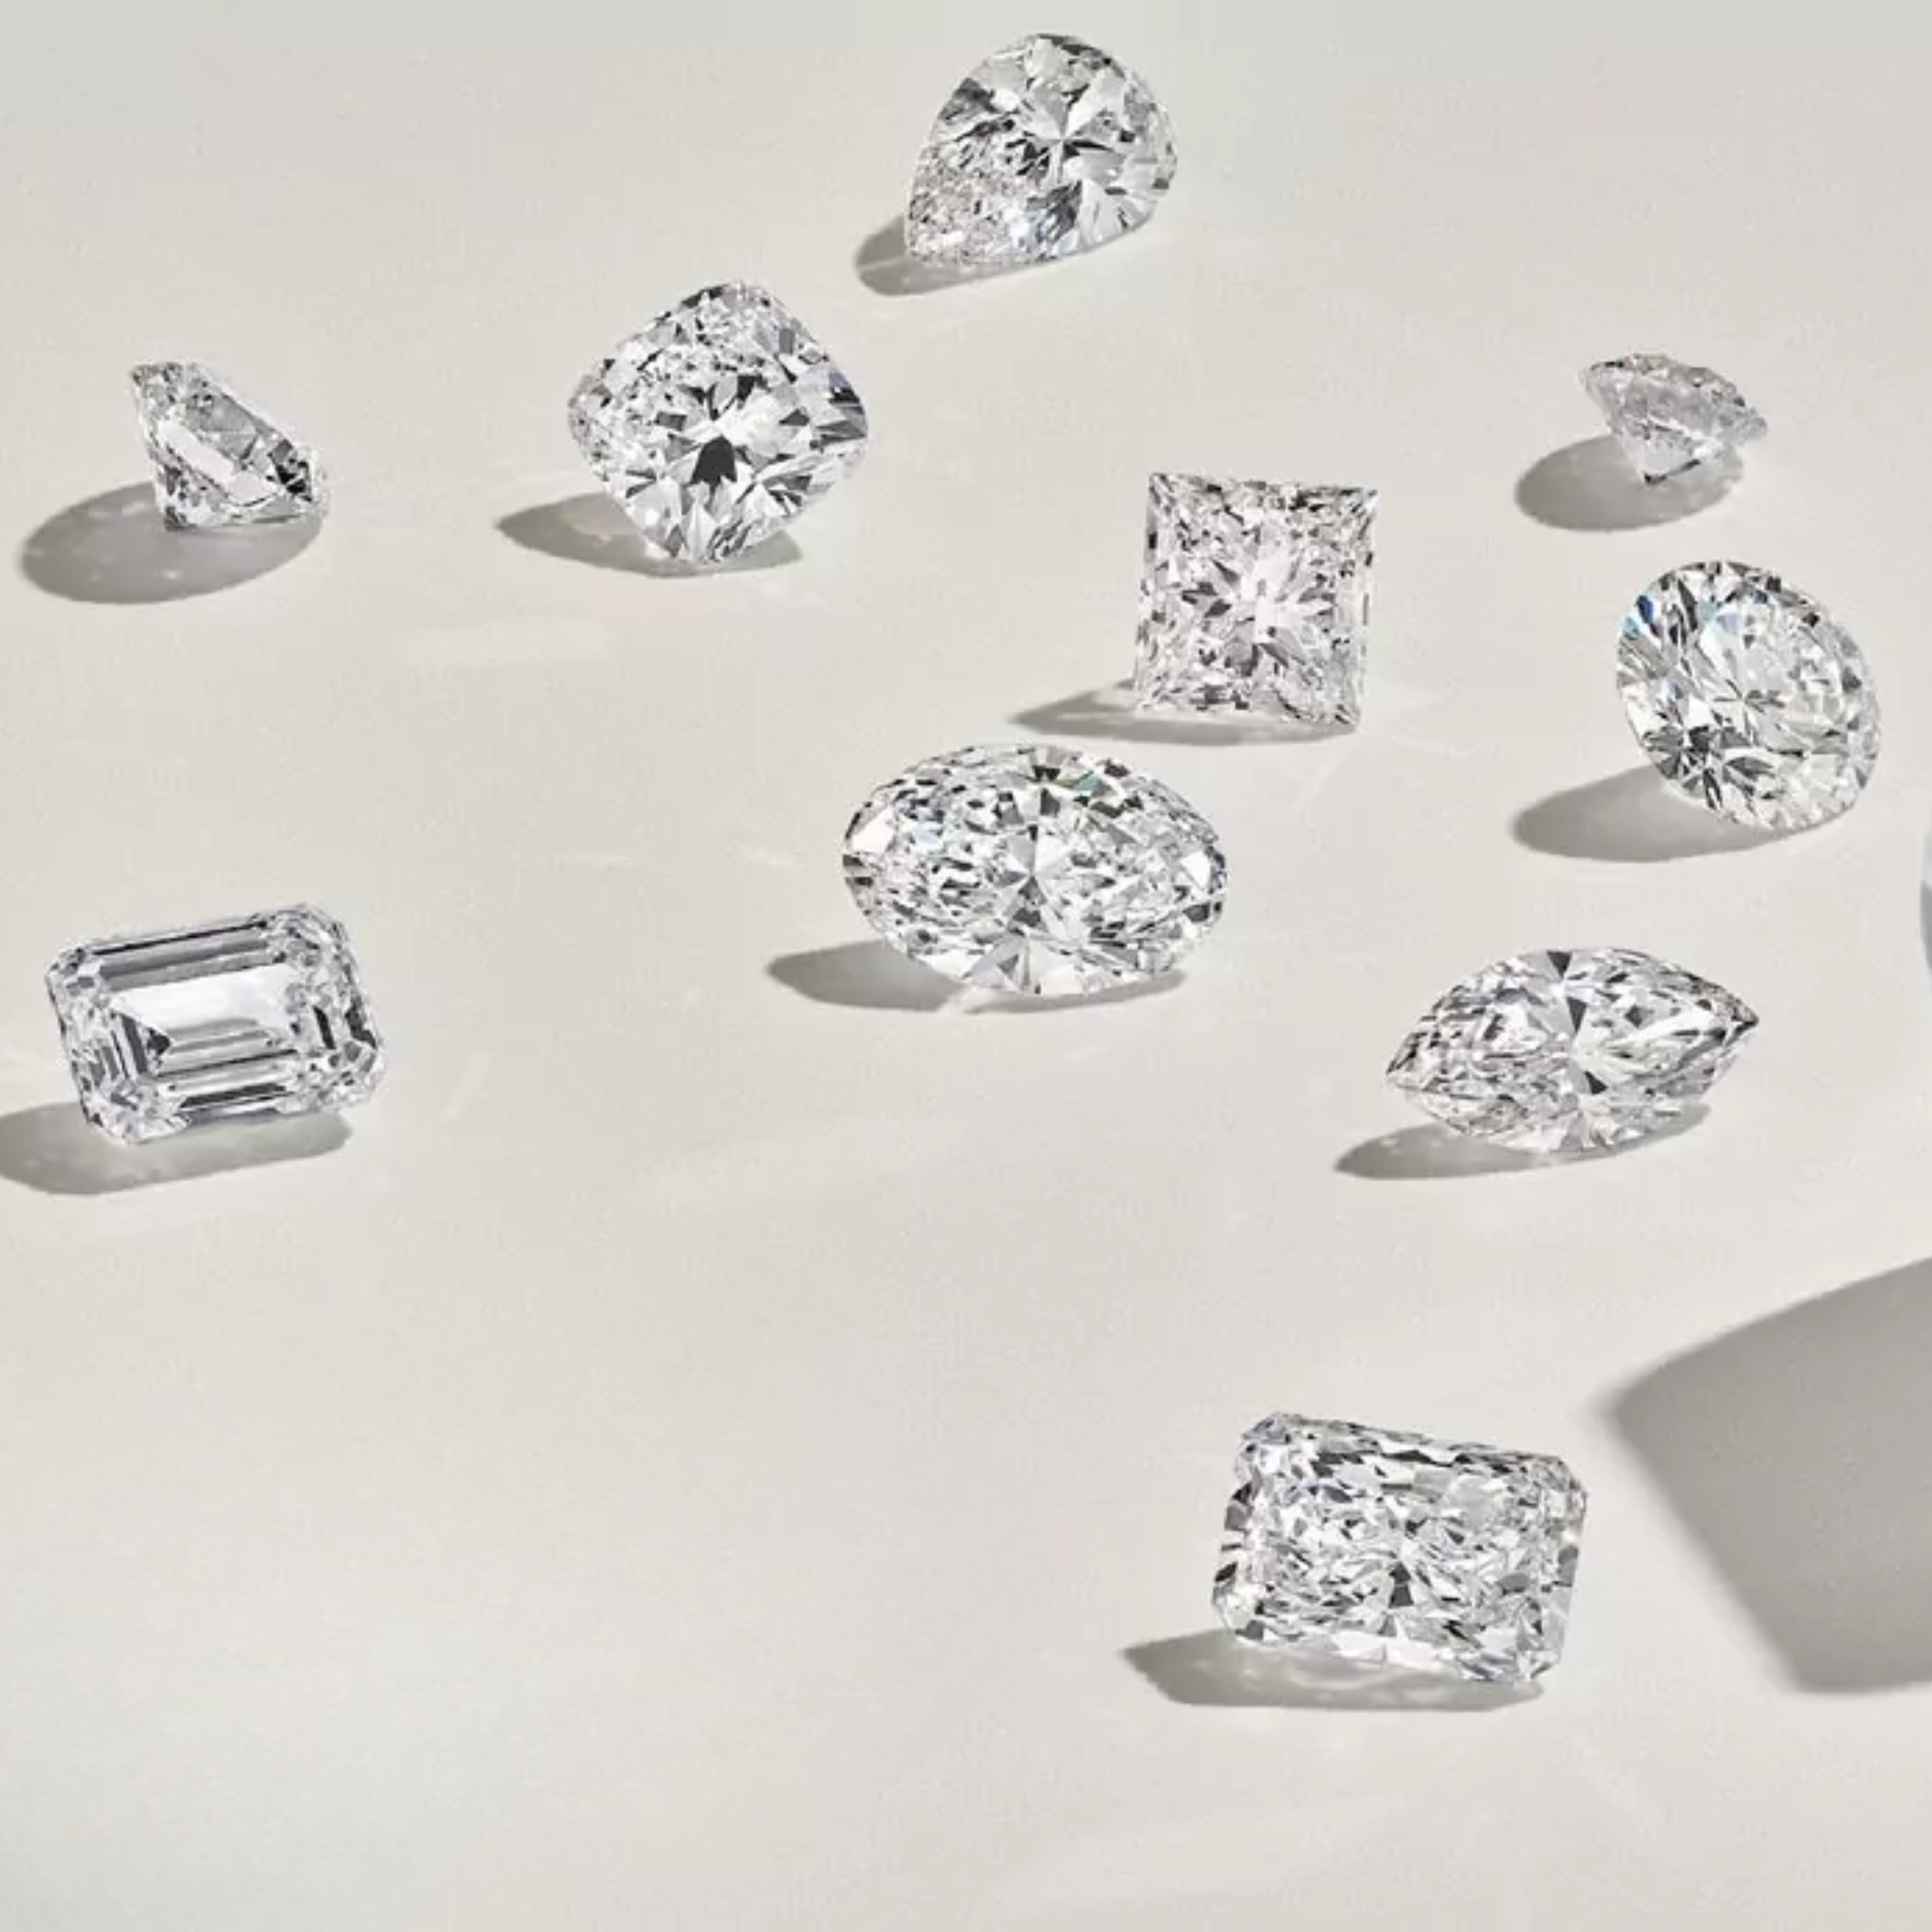 Discover lab grown diamonds: